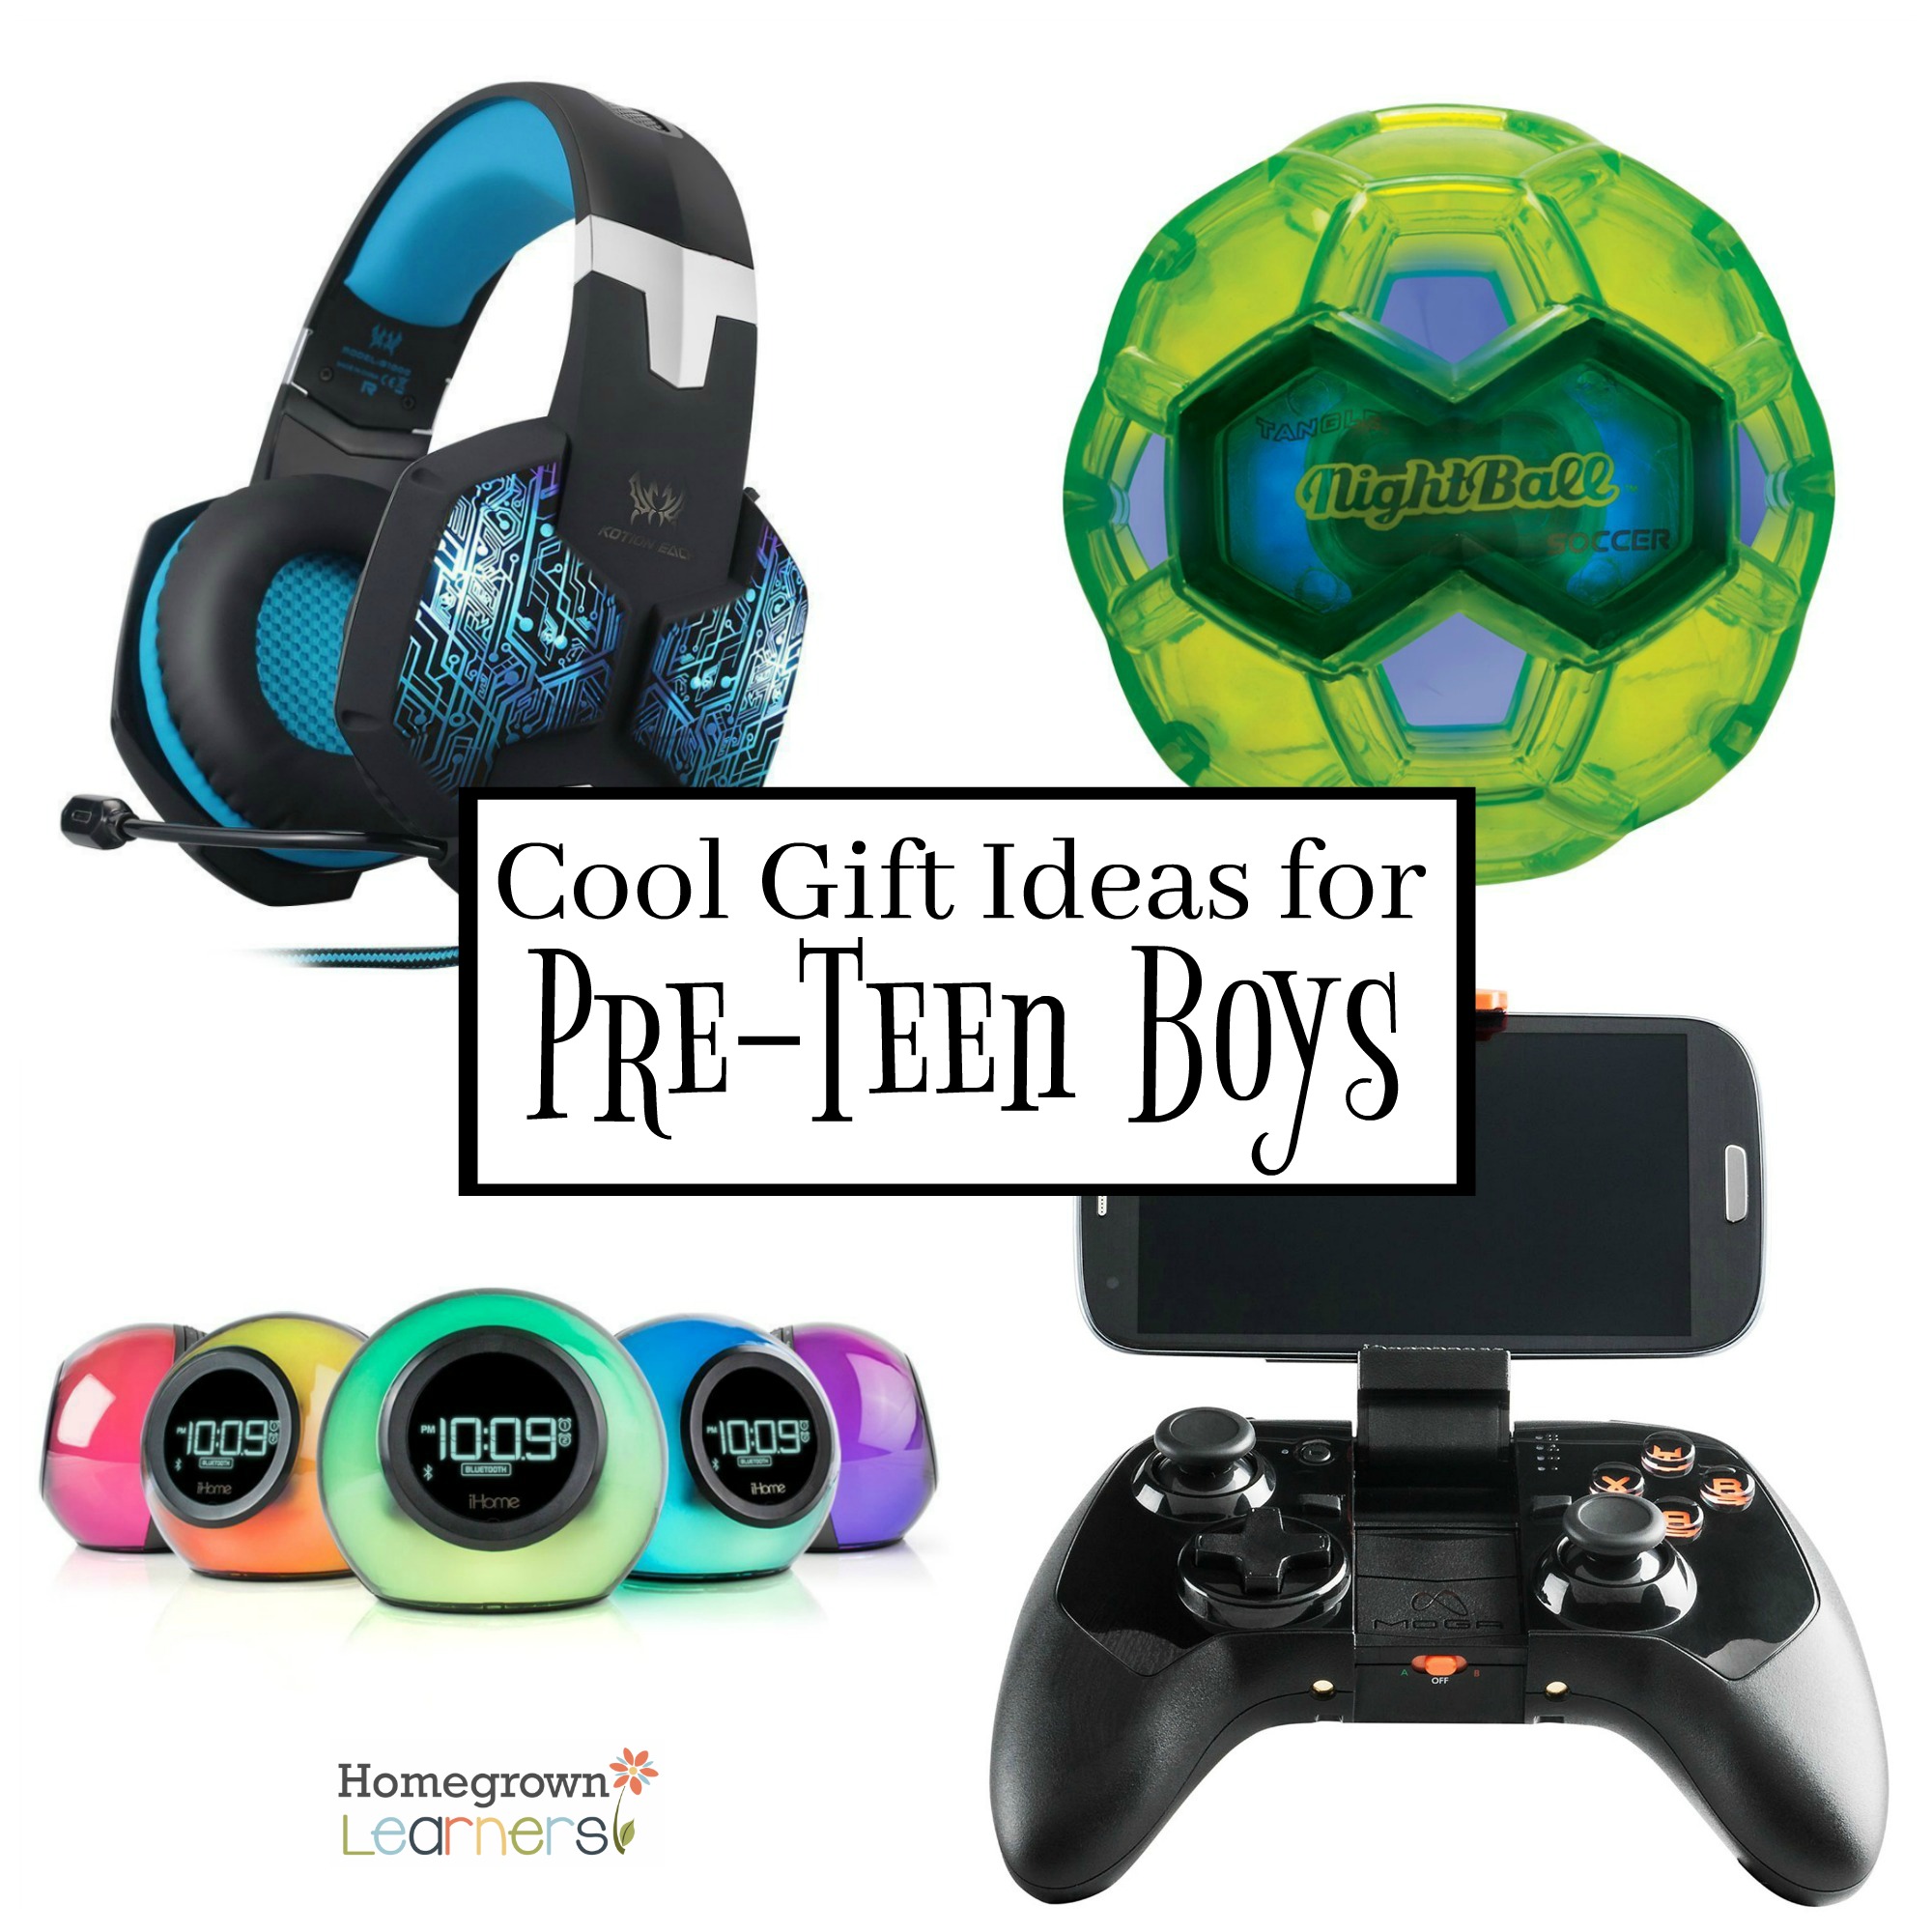 Cool Gift Ideas for Pre-Teen Boys